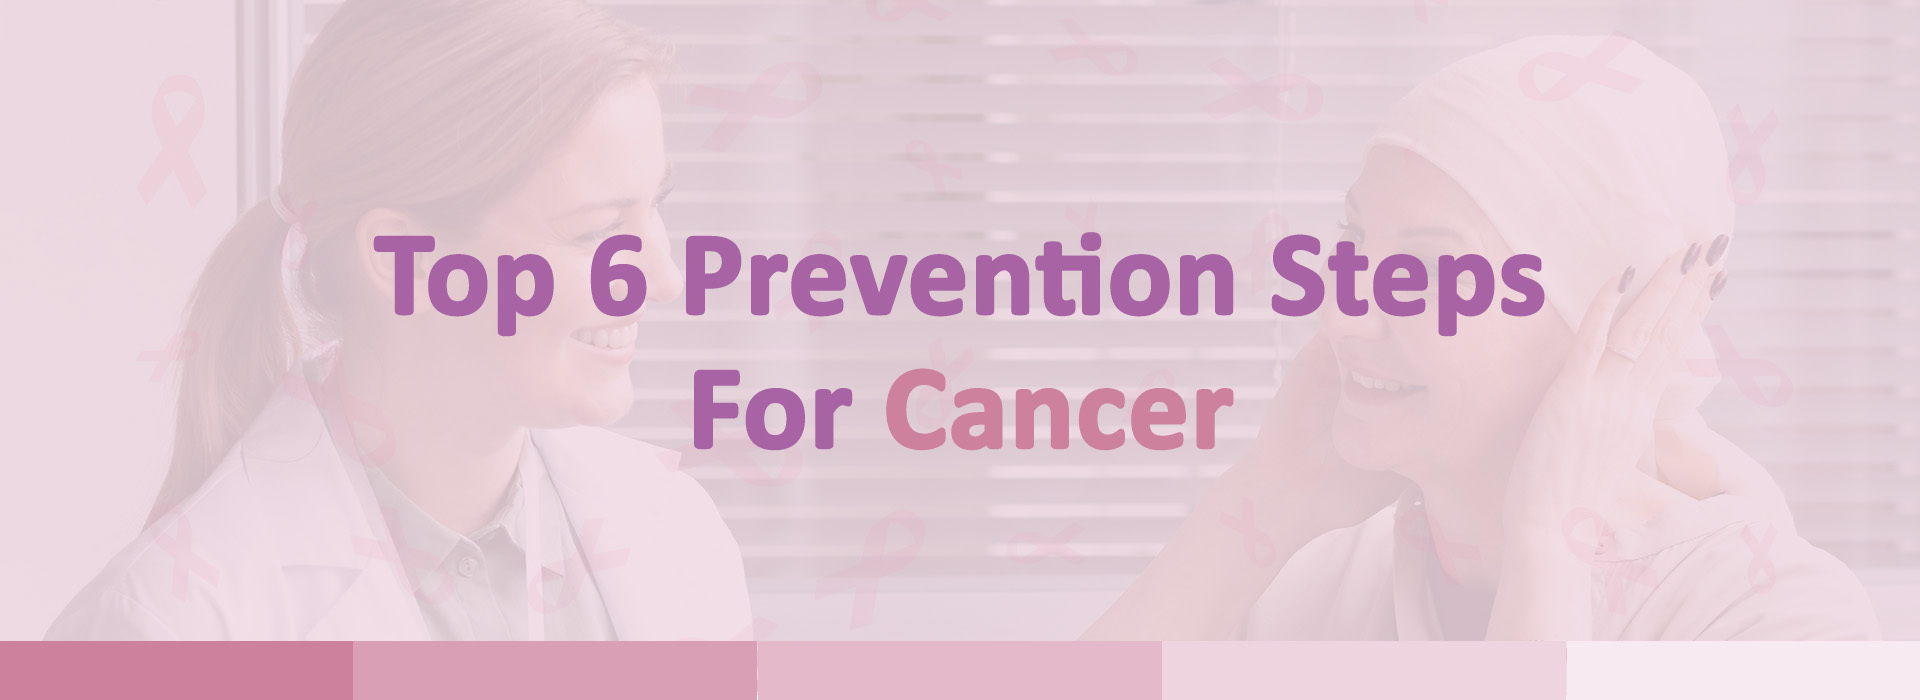 Top 6 Prevention Steps For Cancer